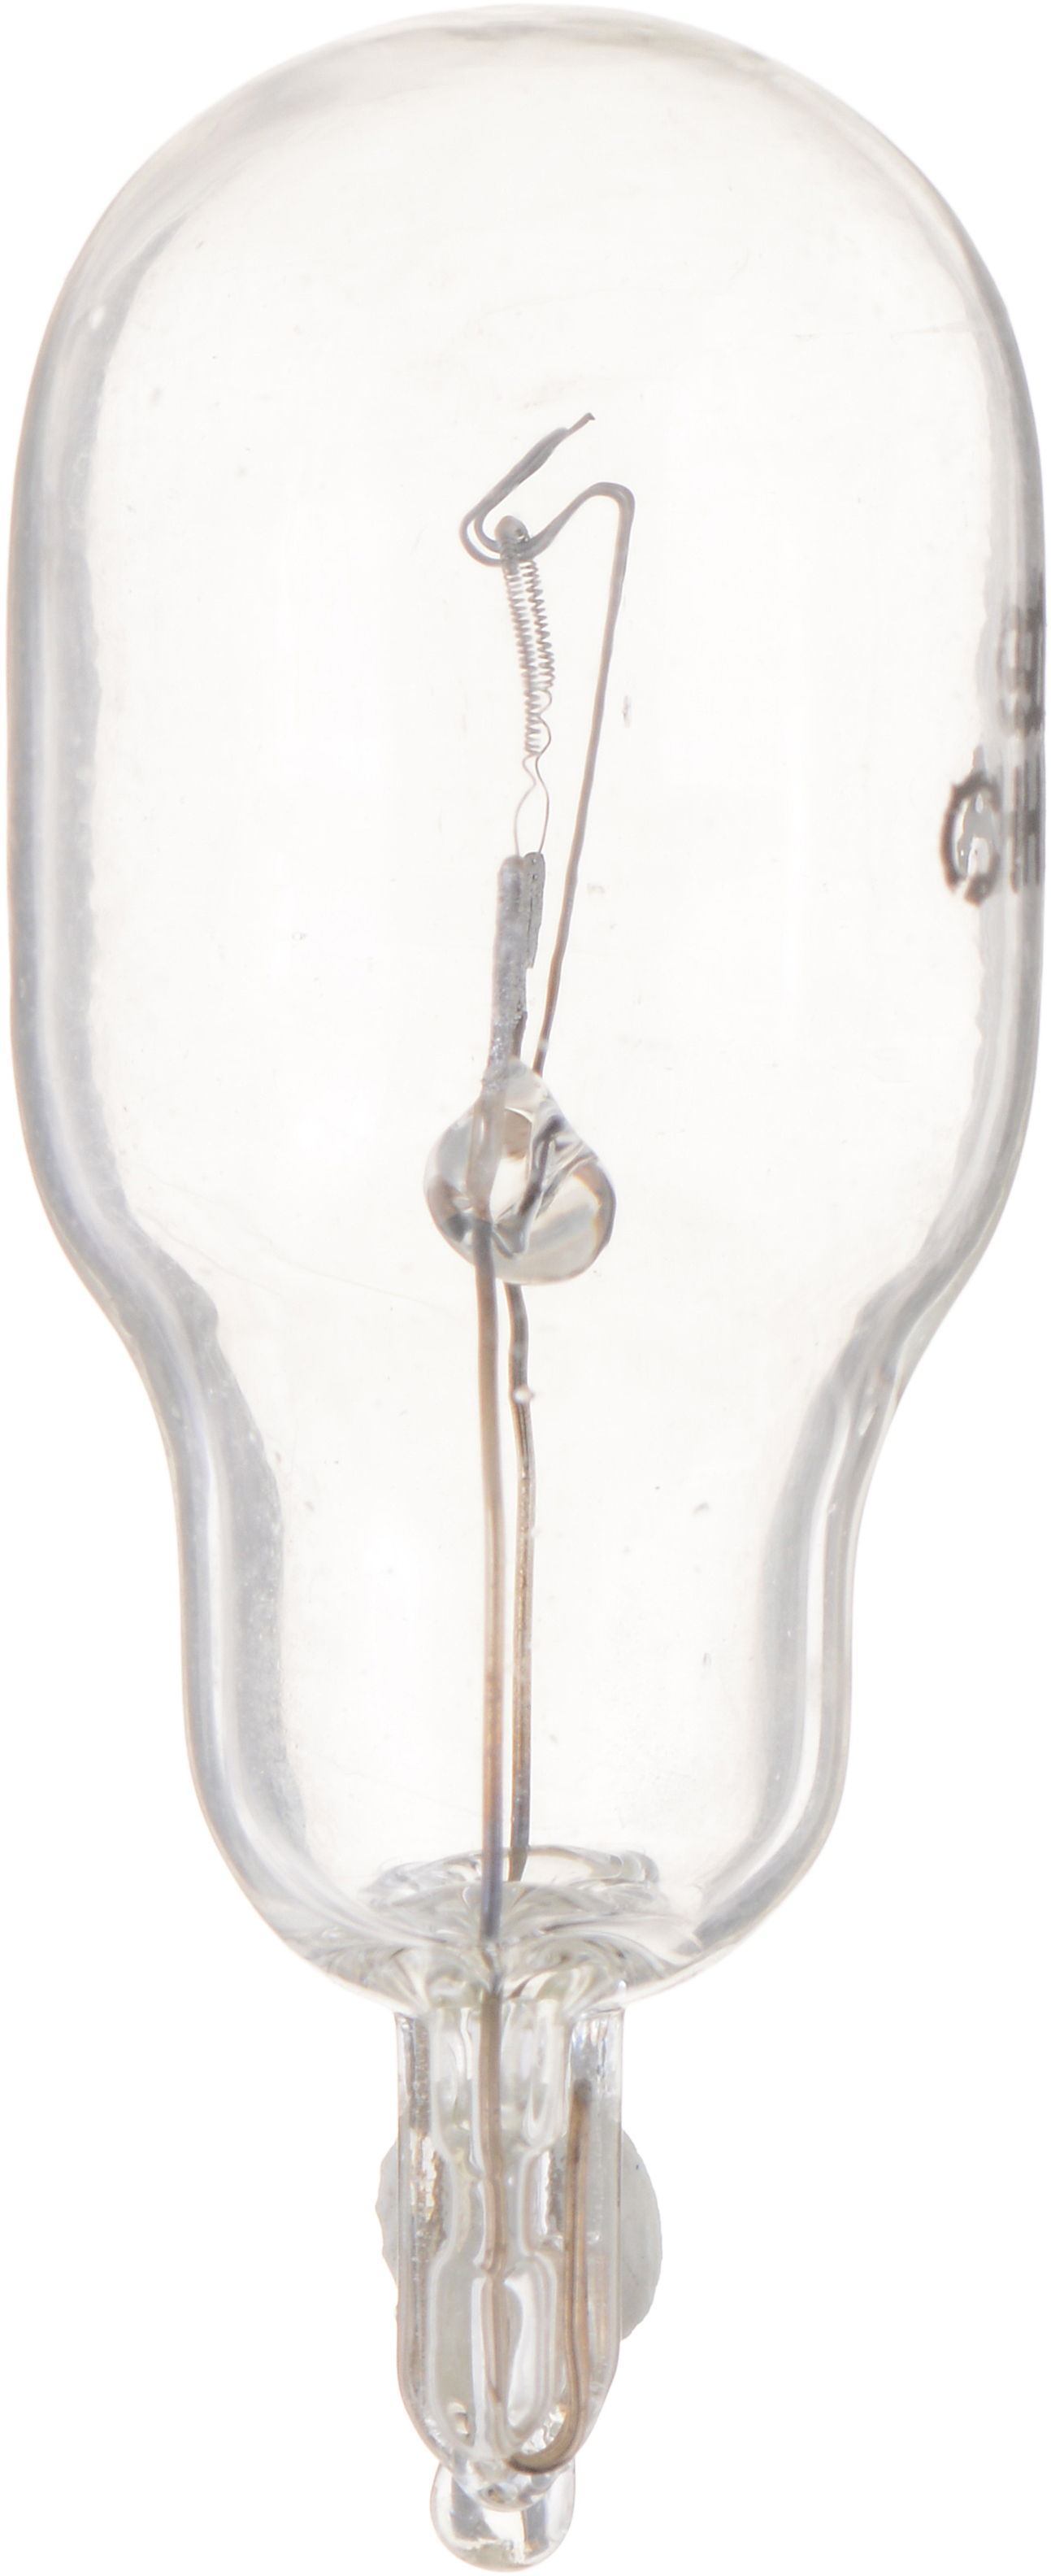 Picture of Philips 906CP Standard Mini Bulb